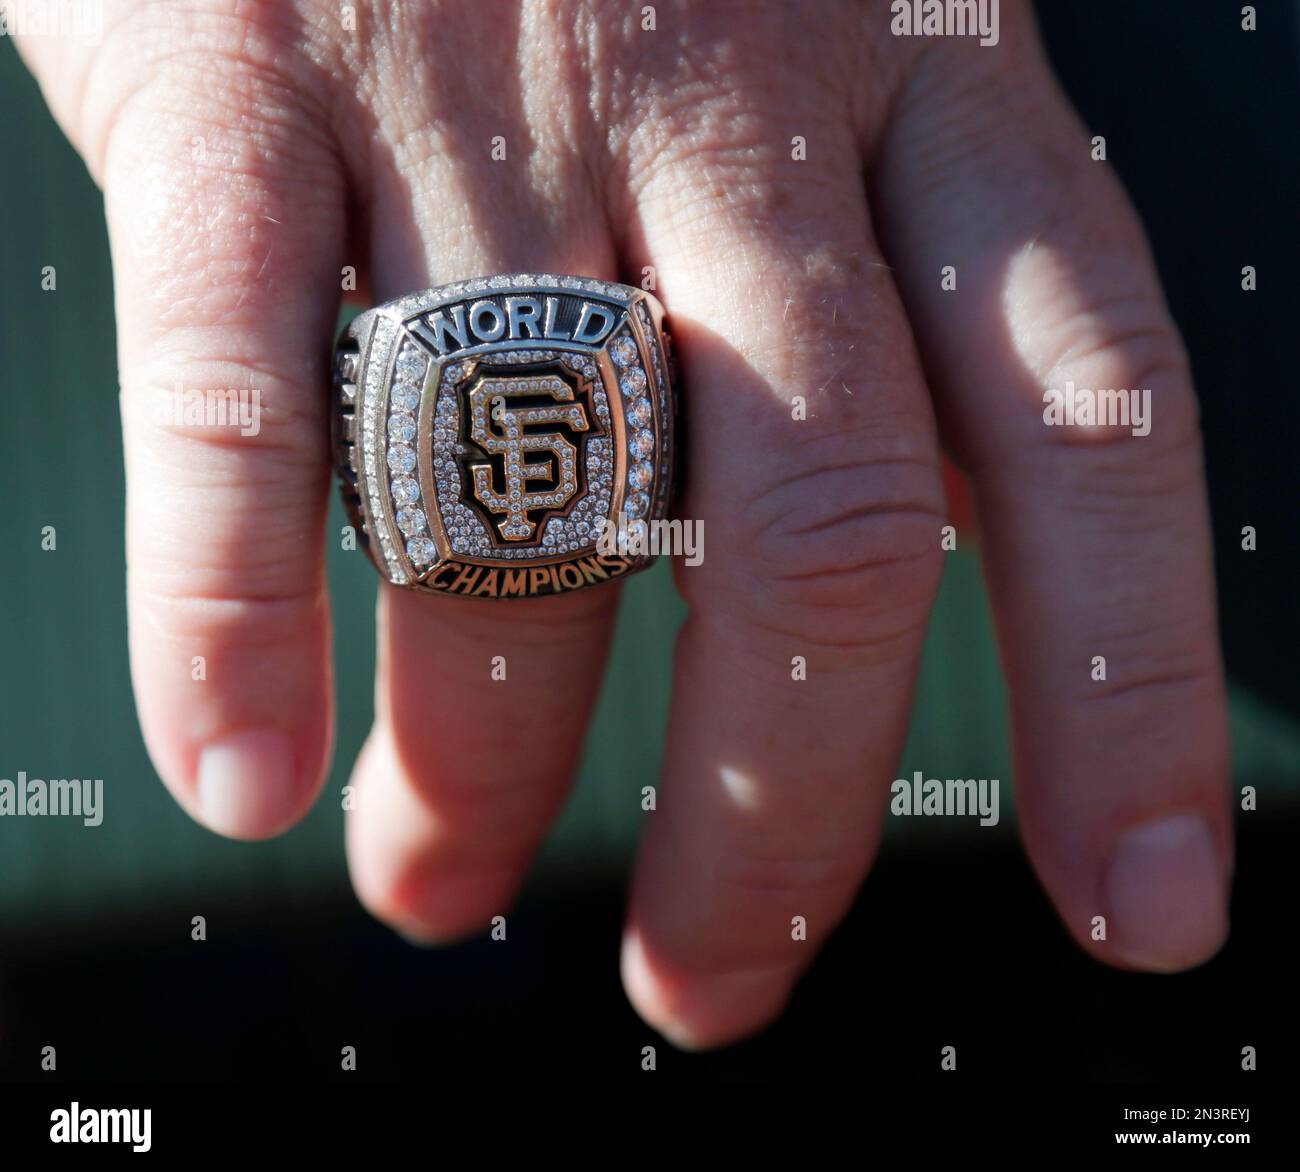 2014 San Francisco Giants World Series Championship Ring - www